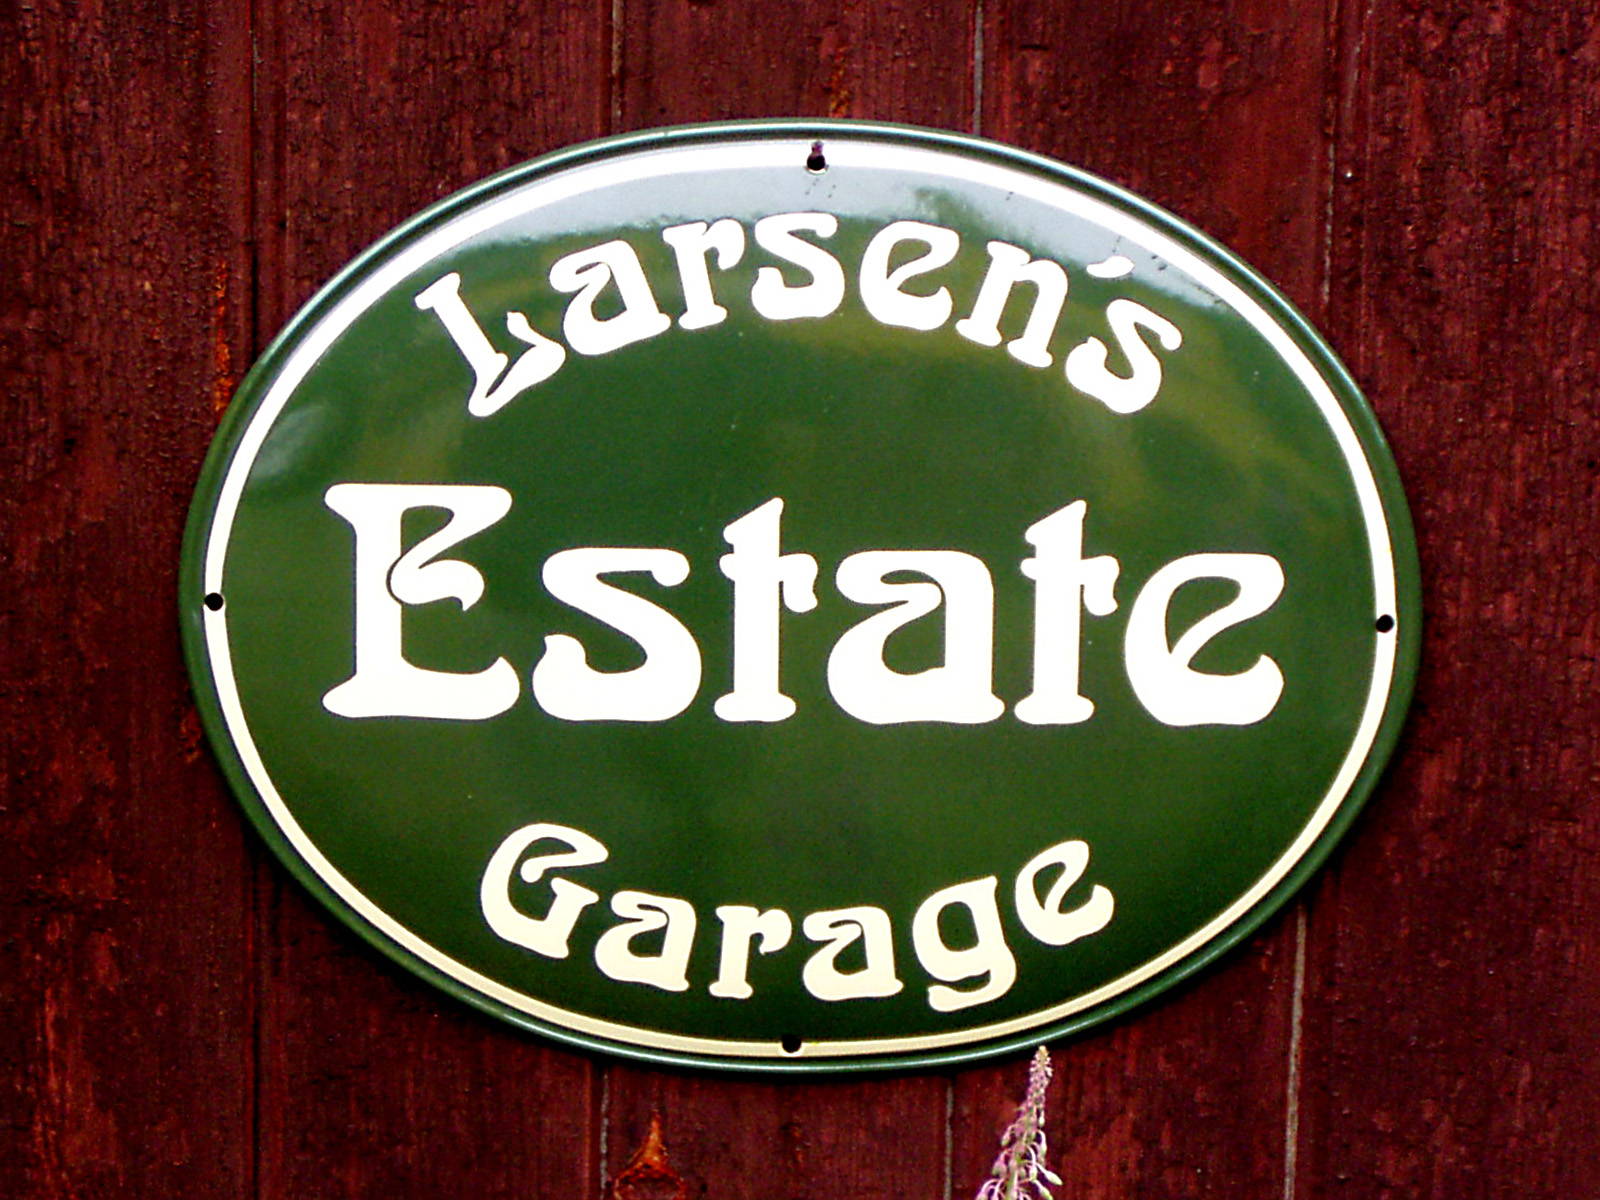 Husskilte-Larsens Estate-web1600